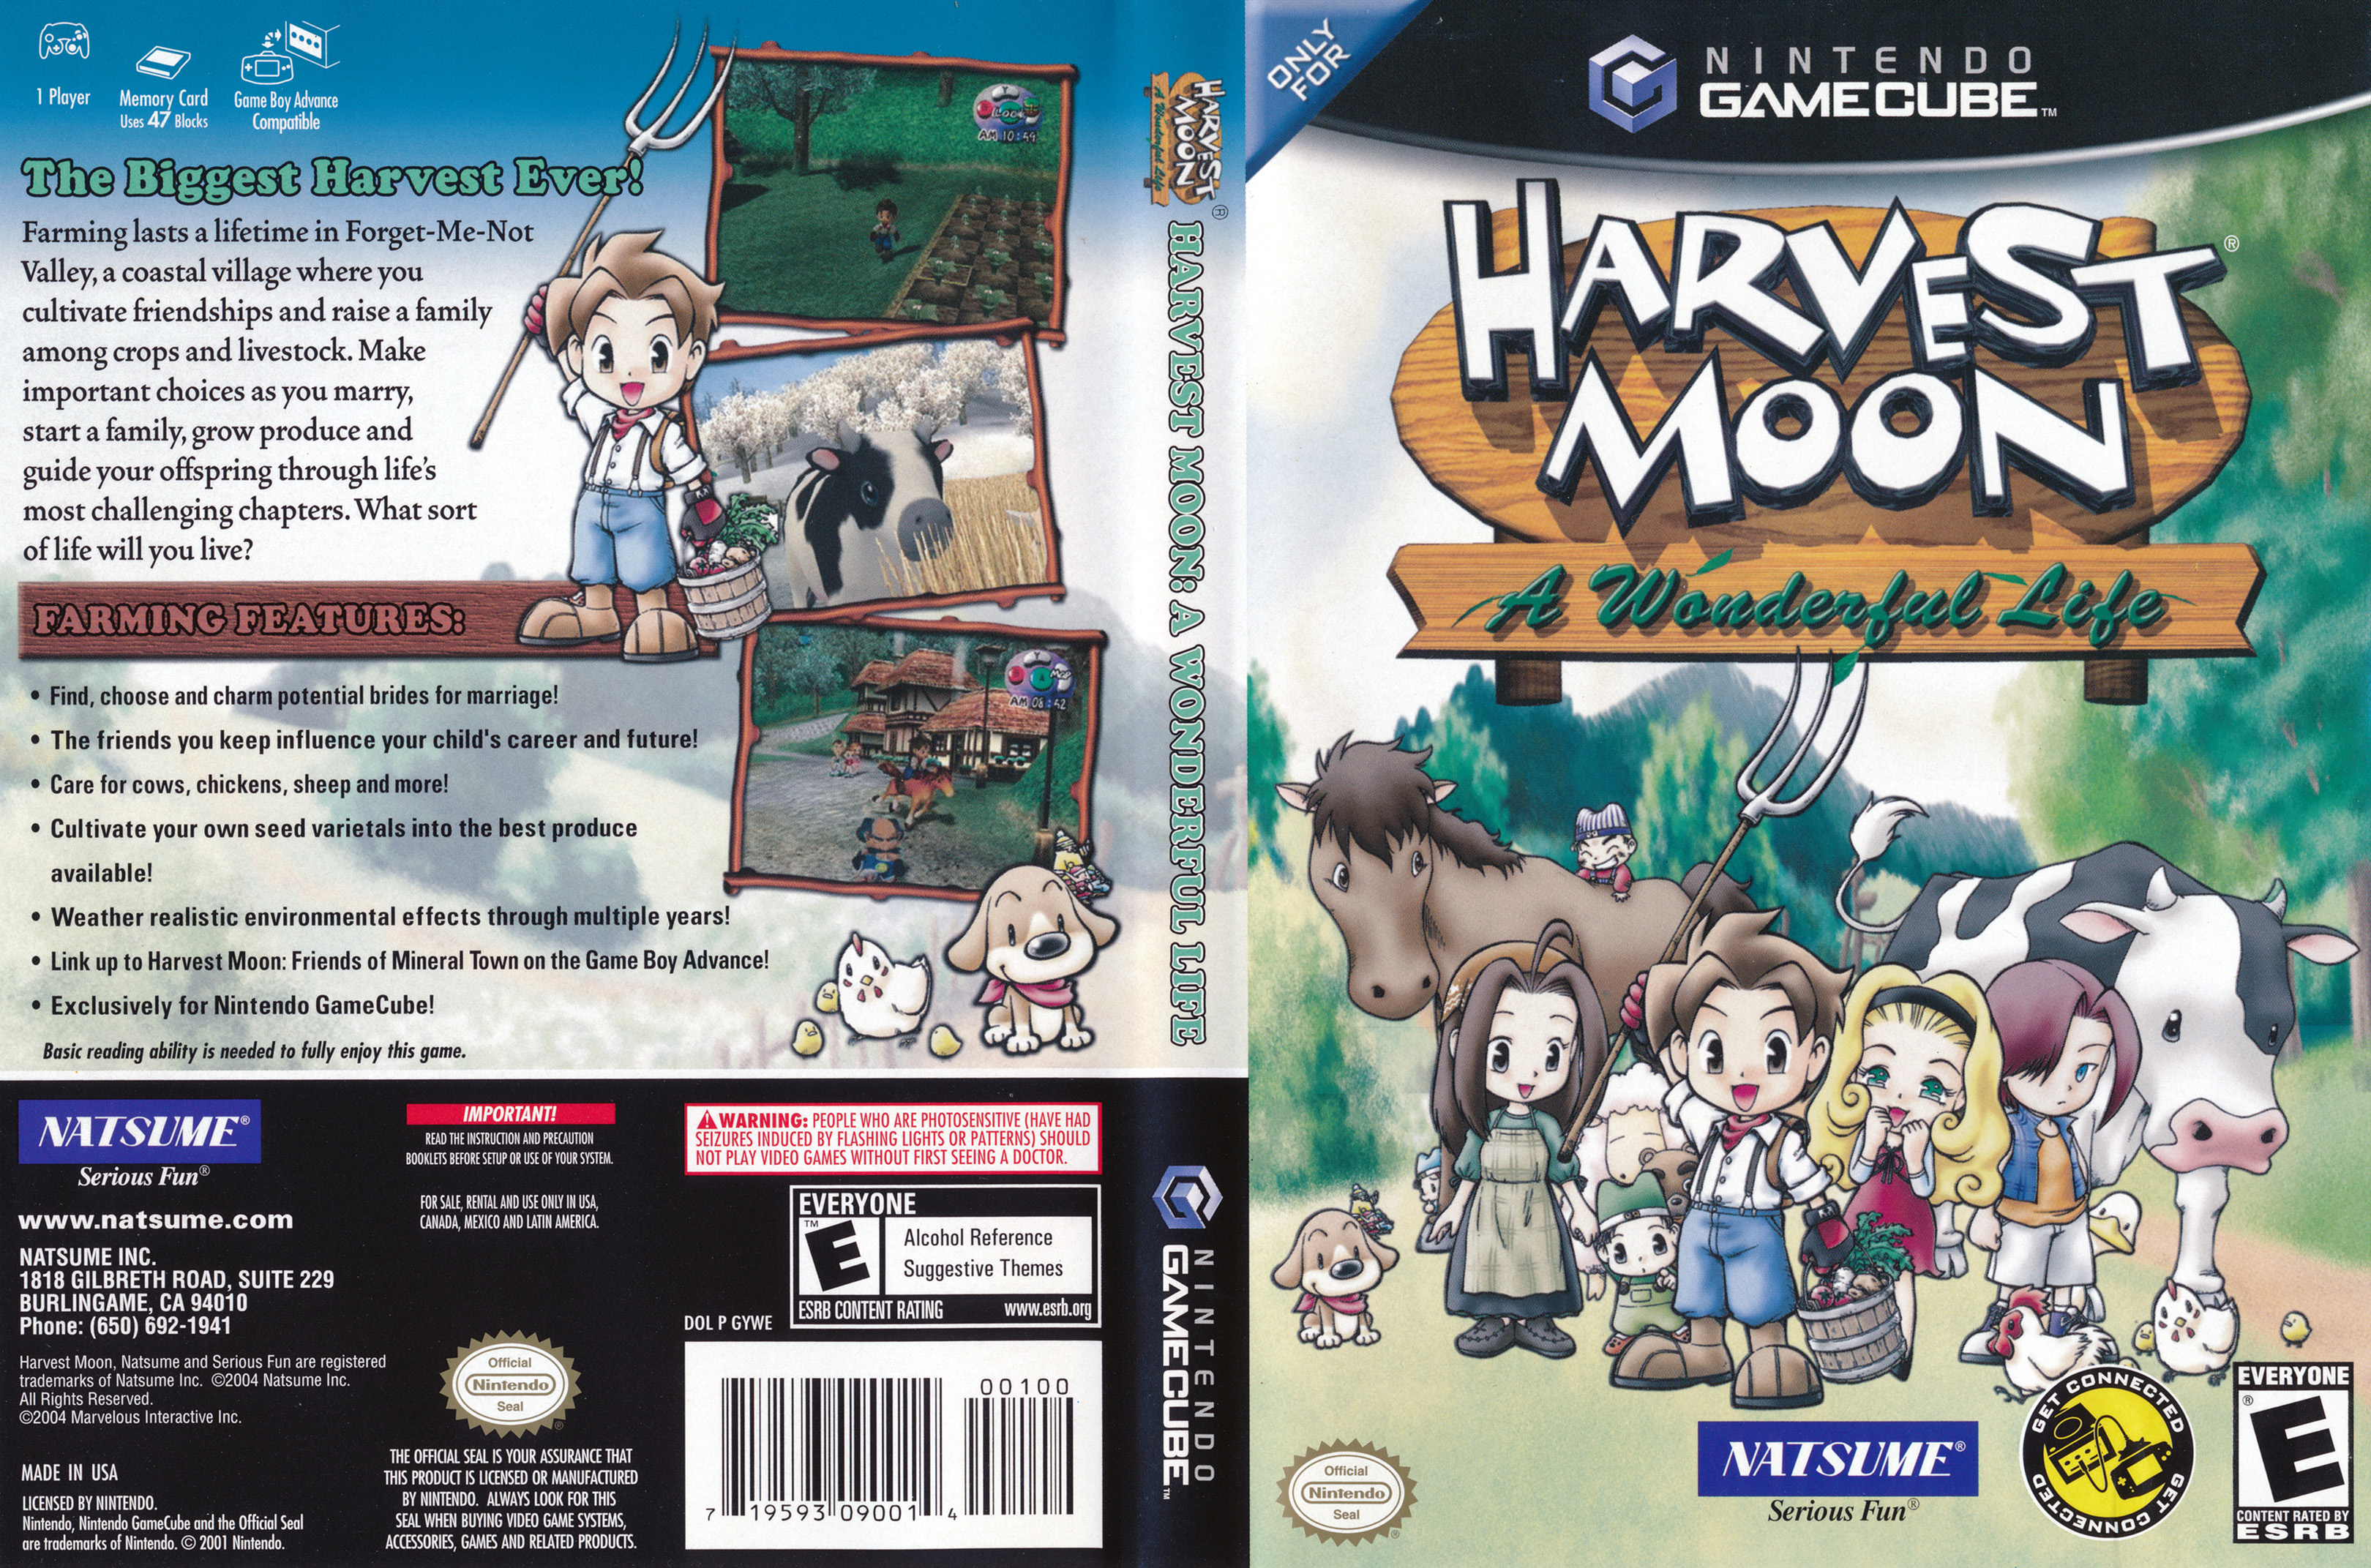 HARVEST MOON A Wonderful Life + MANUAL - Nintendo Gamecube CIB Black Label  Game